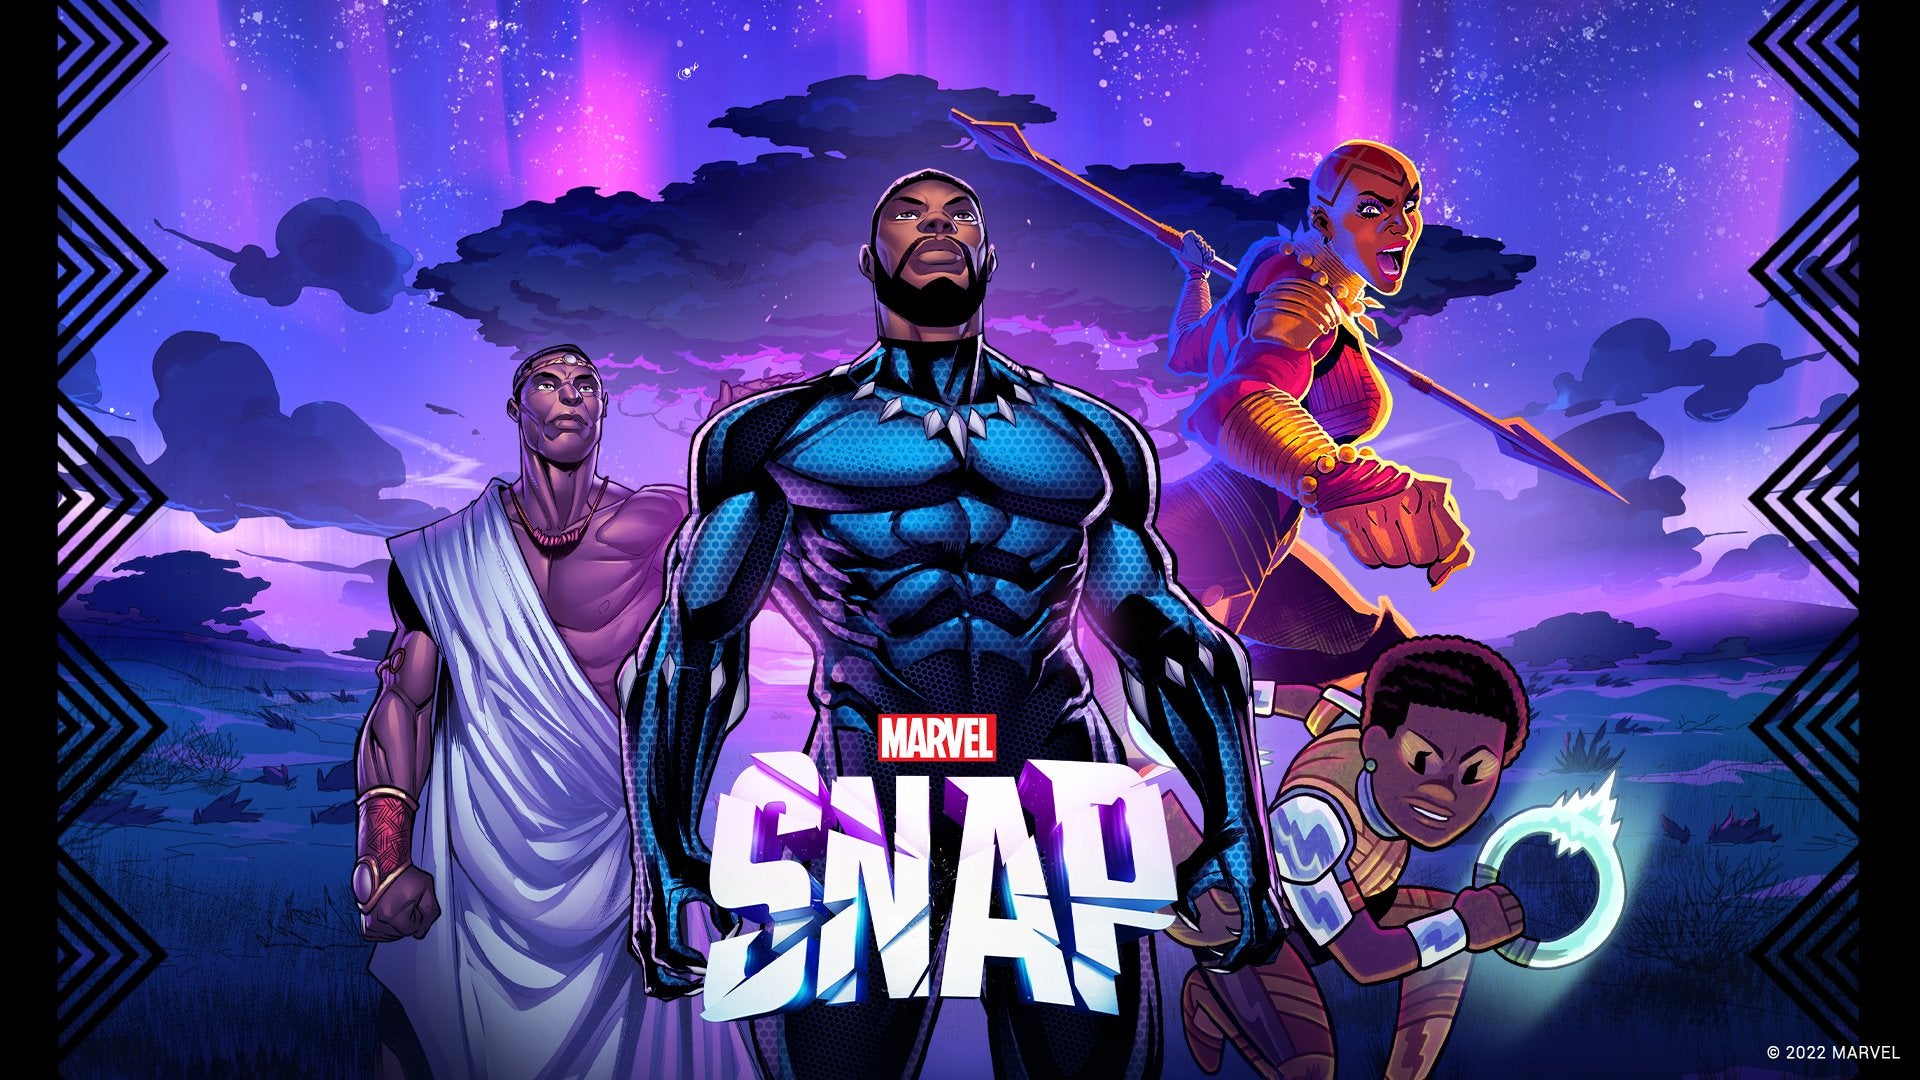 Marvel Snap Warriors of Wakanda official art